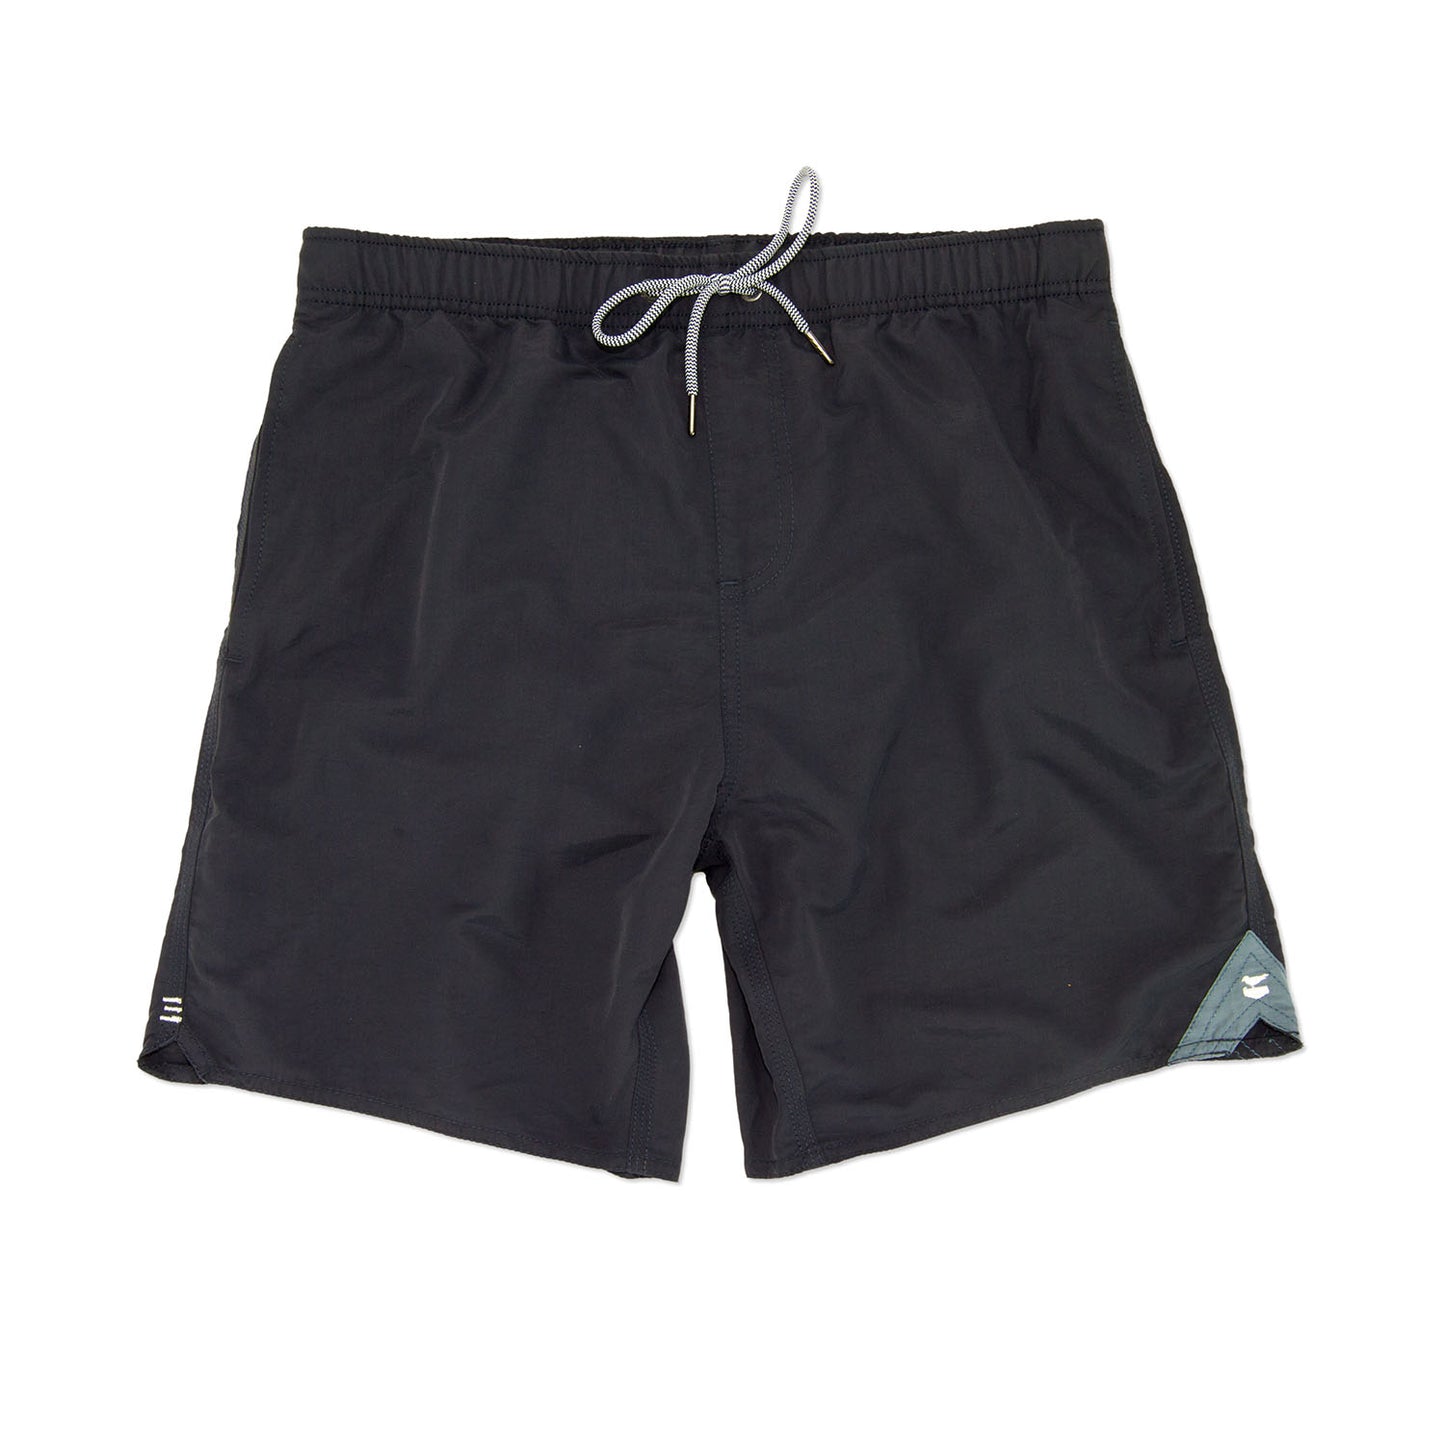 Bowery 17" Volley Shorts - Black